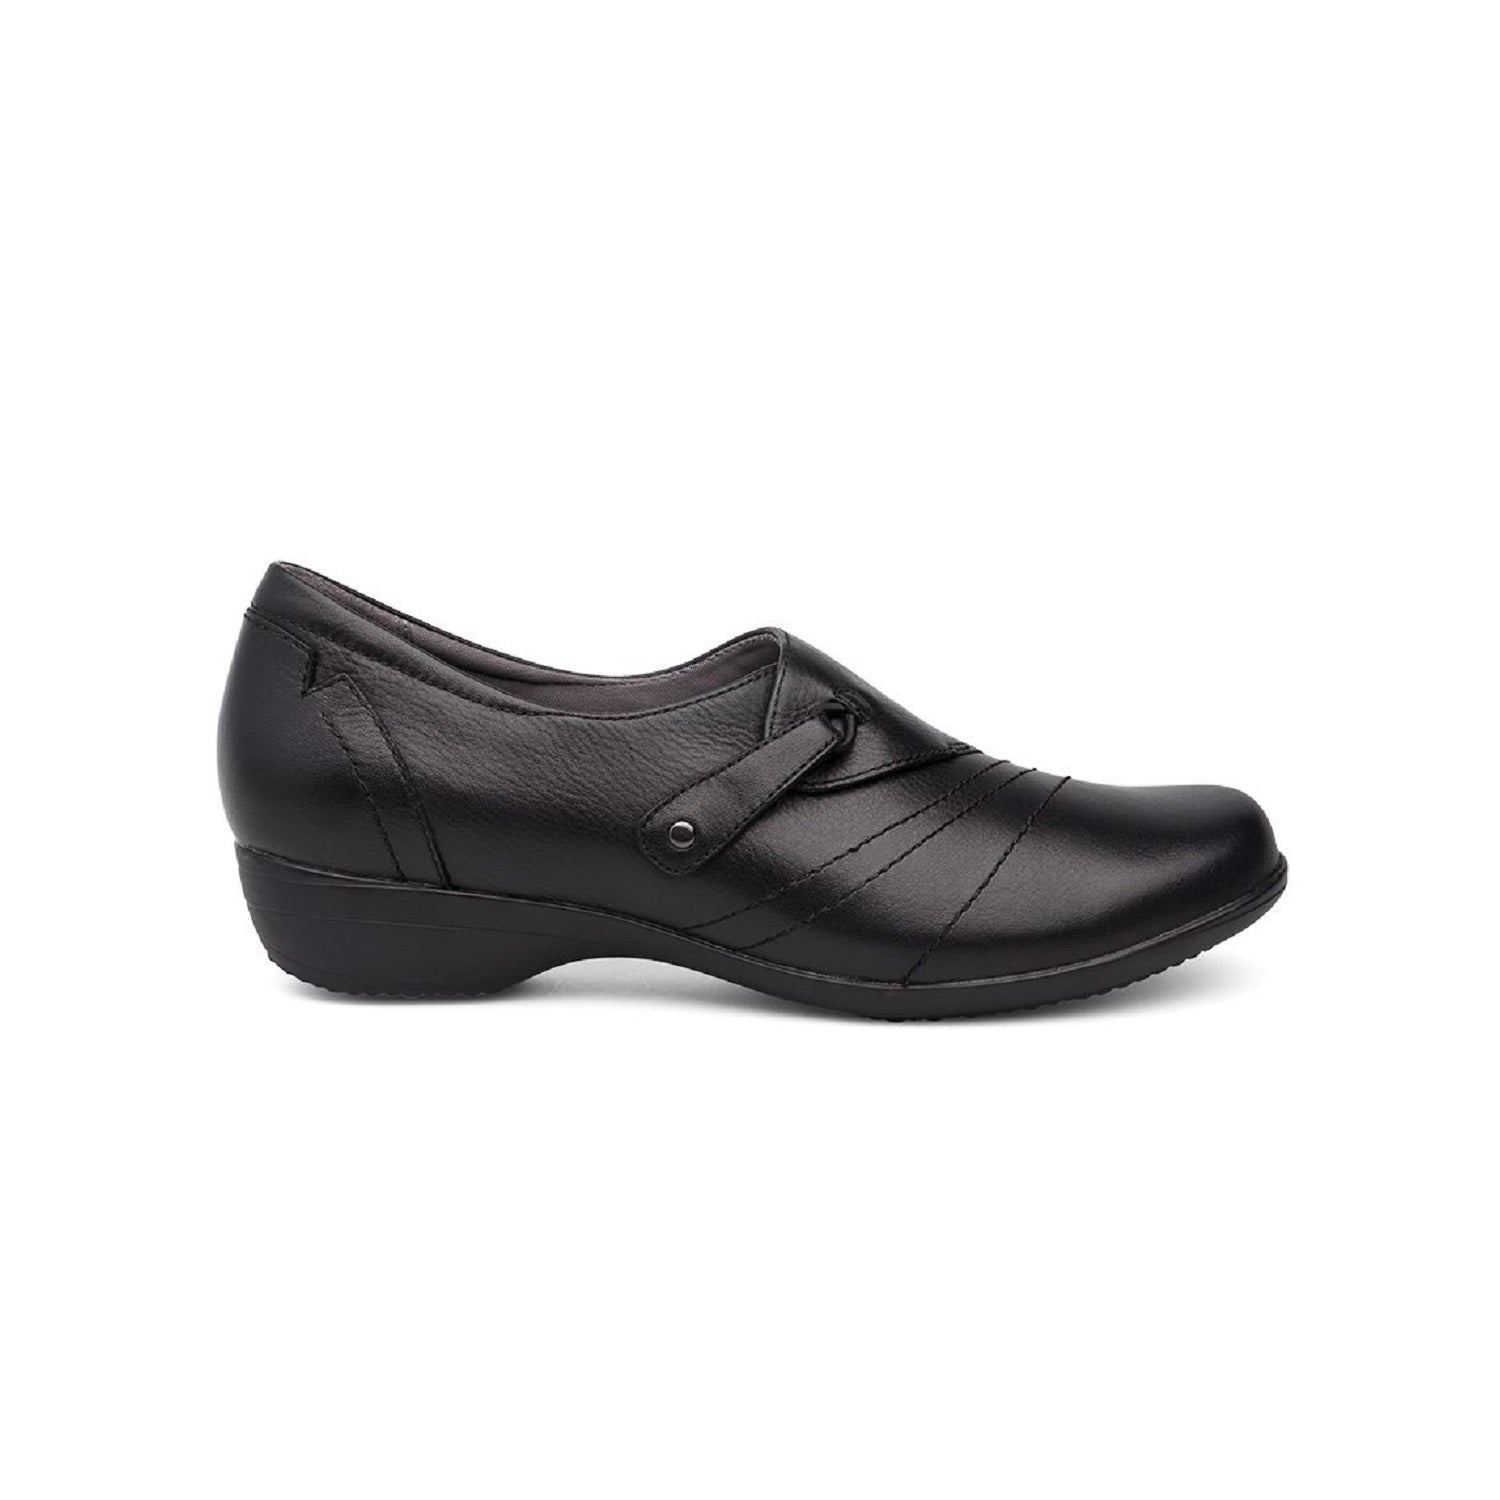 Black loafer with slight heel and adjustable loop.